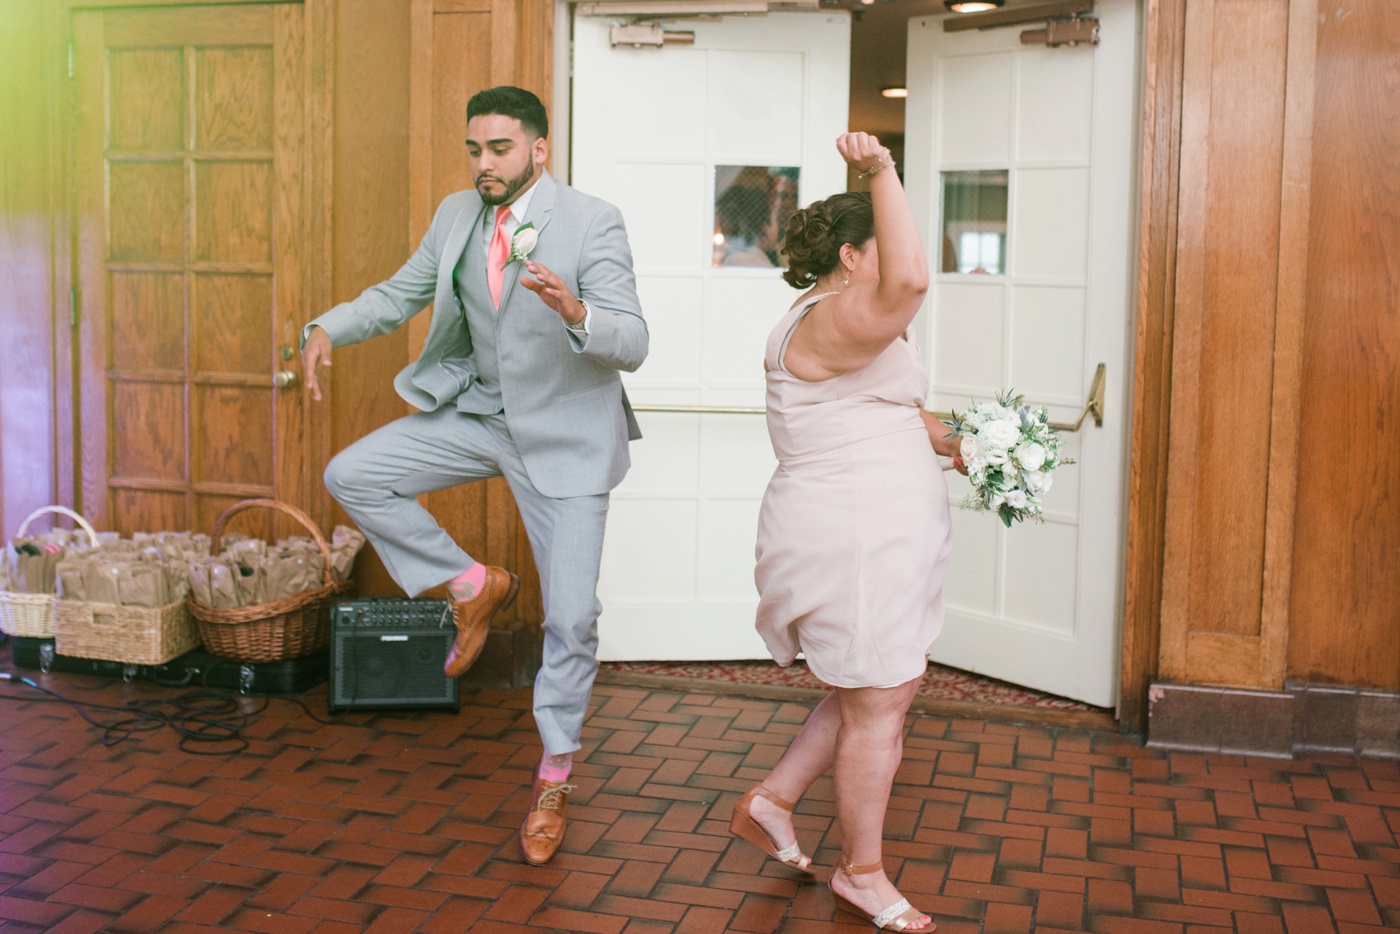 102 - Daniela + Franco - Celebrate at Snug Harbor Wedding - Staten Island New York Wedding Photographer - Alison Dunn Photography photo